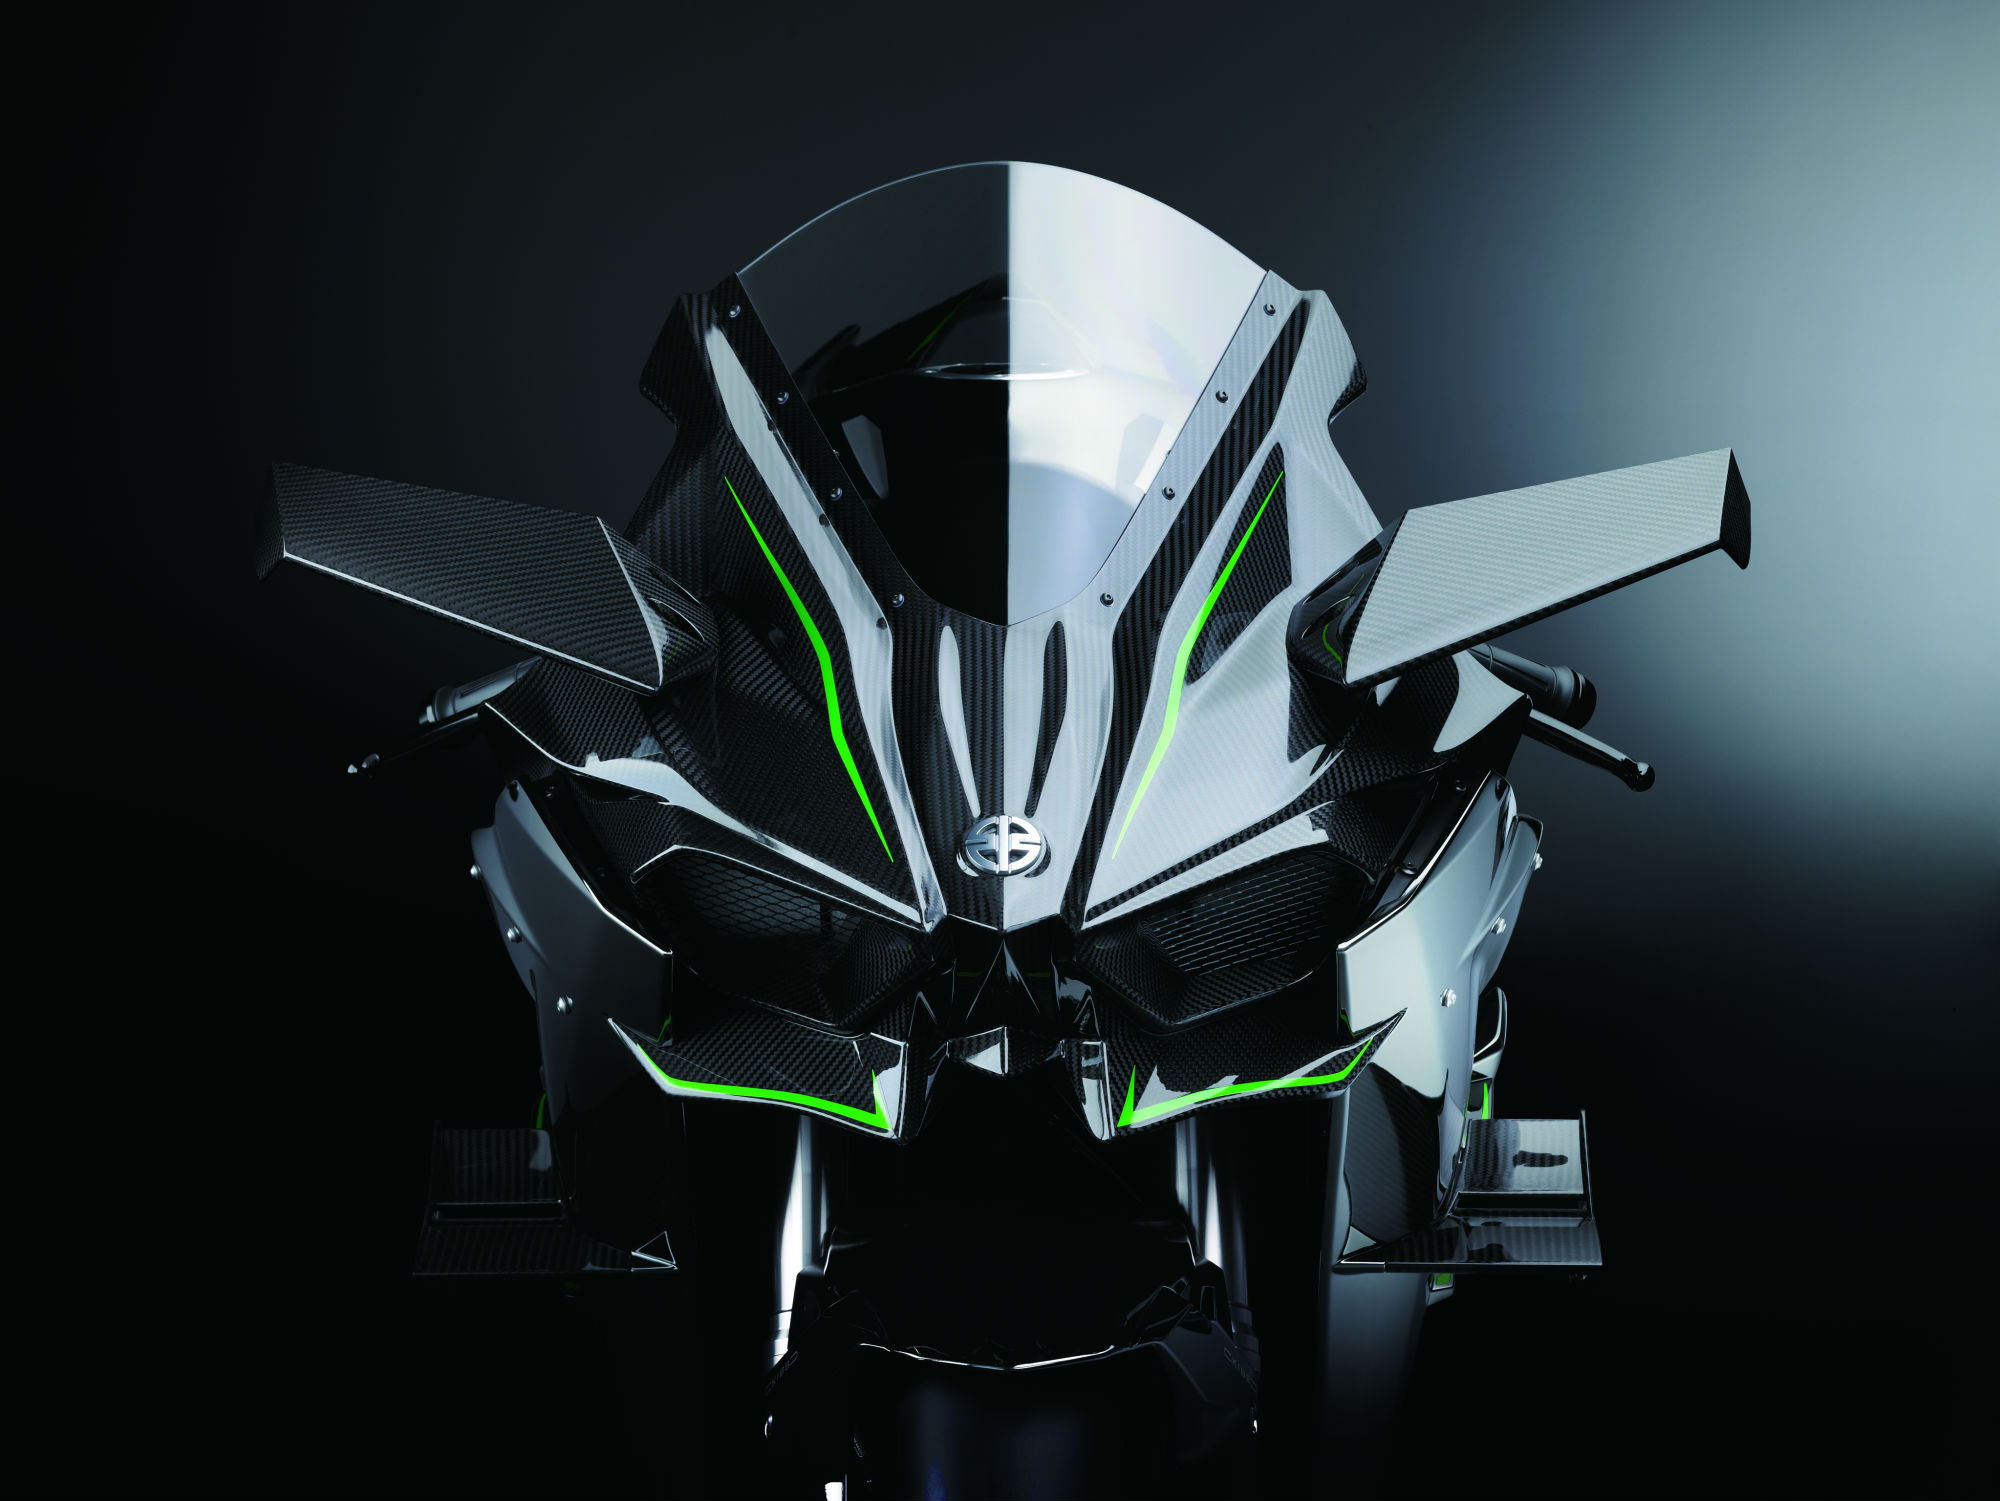 Intermot 2014: Kawasaki Ninja H2R specs and pictures revealed